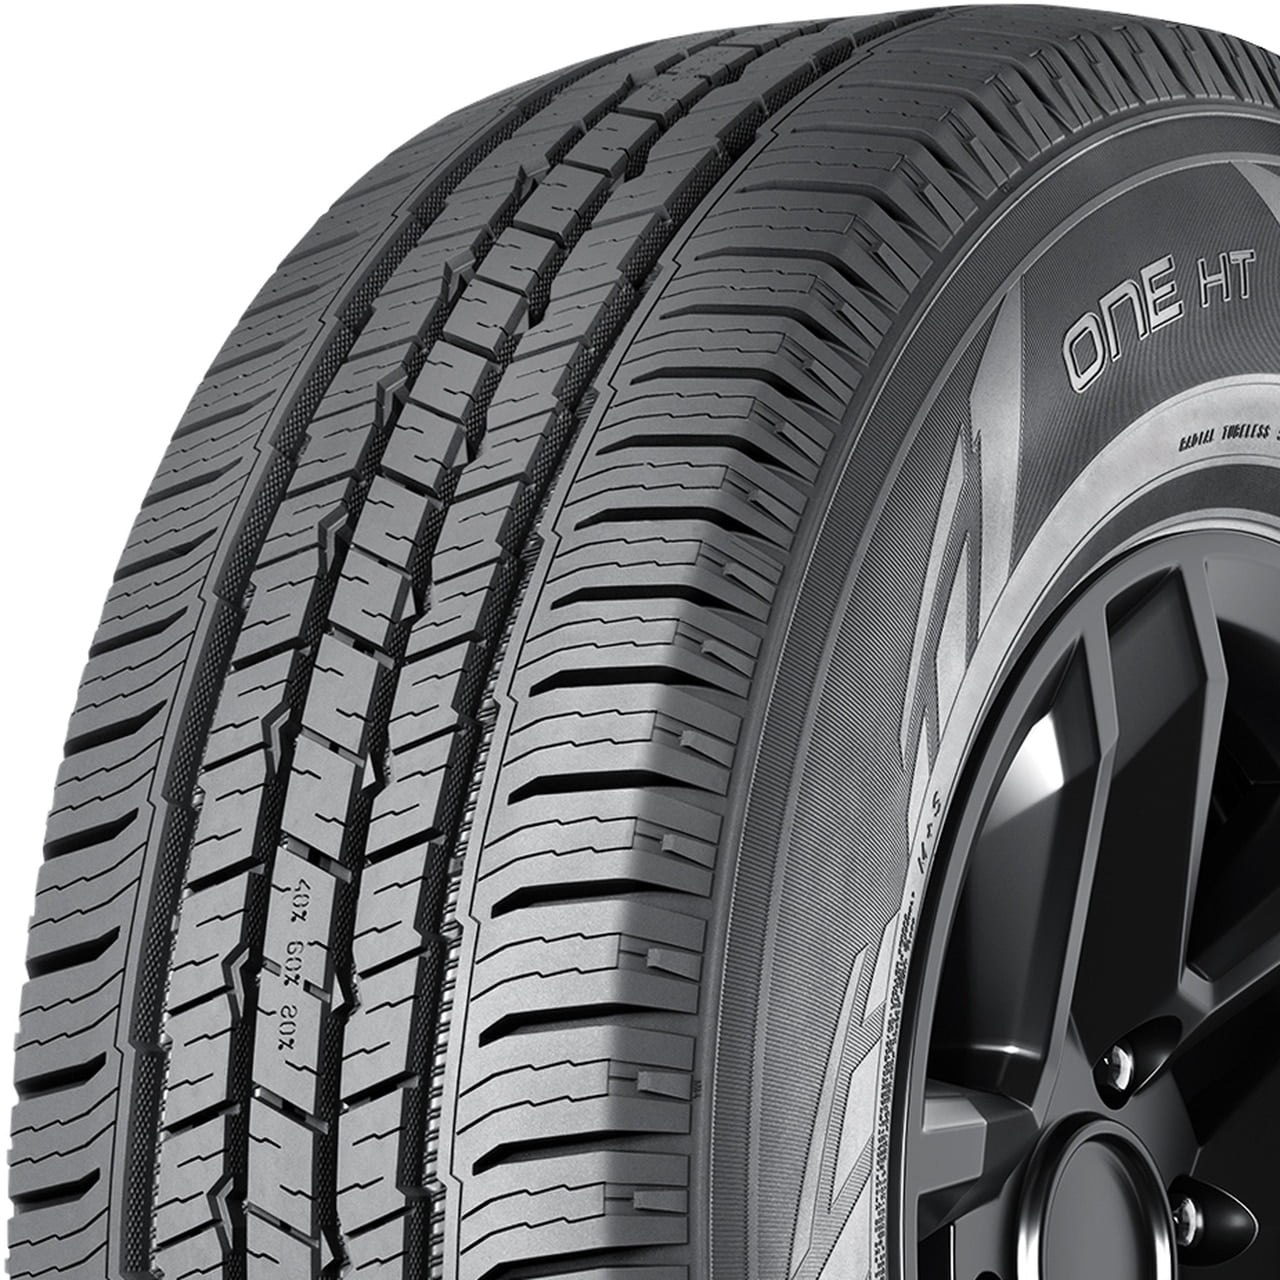 nokian-one-tire-has-factory-pothole-protection-warranty-promises